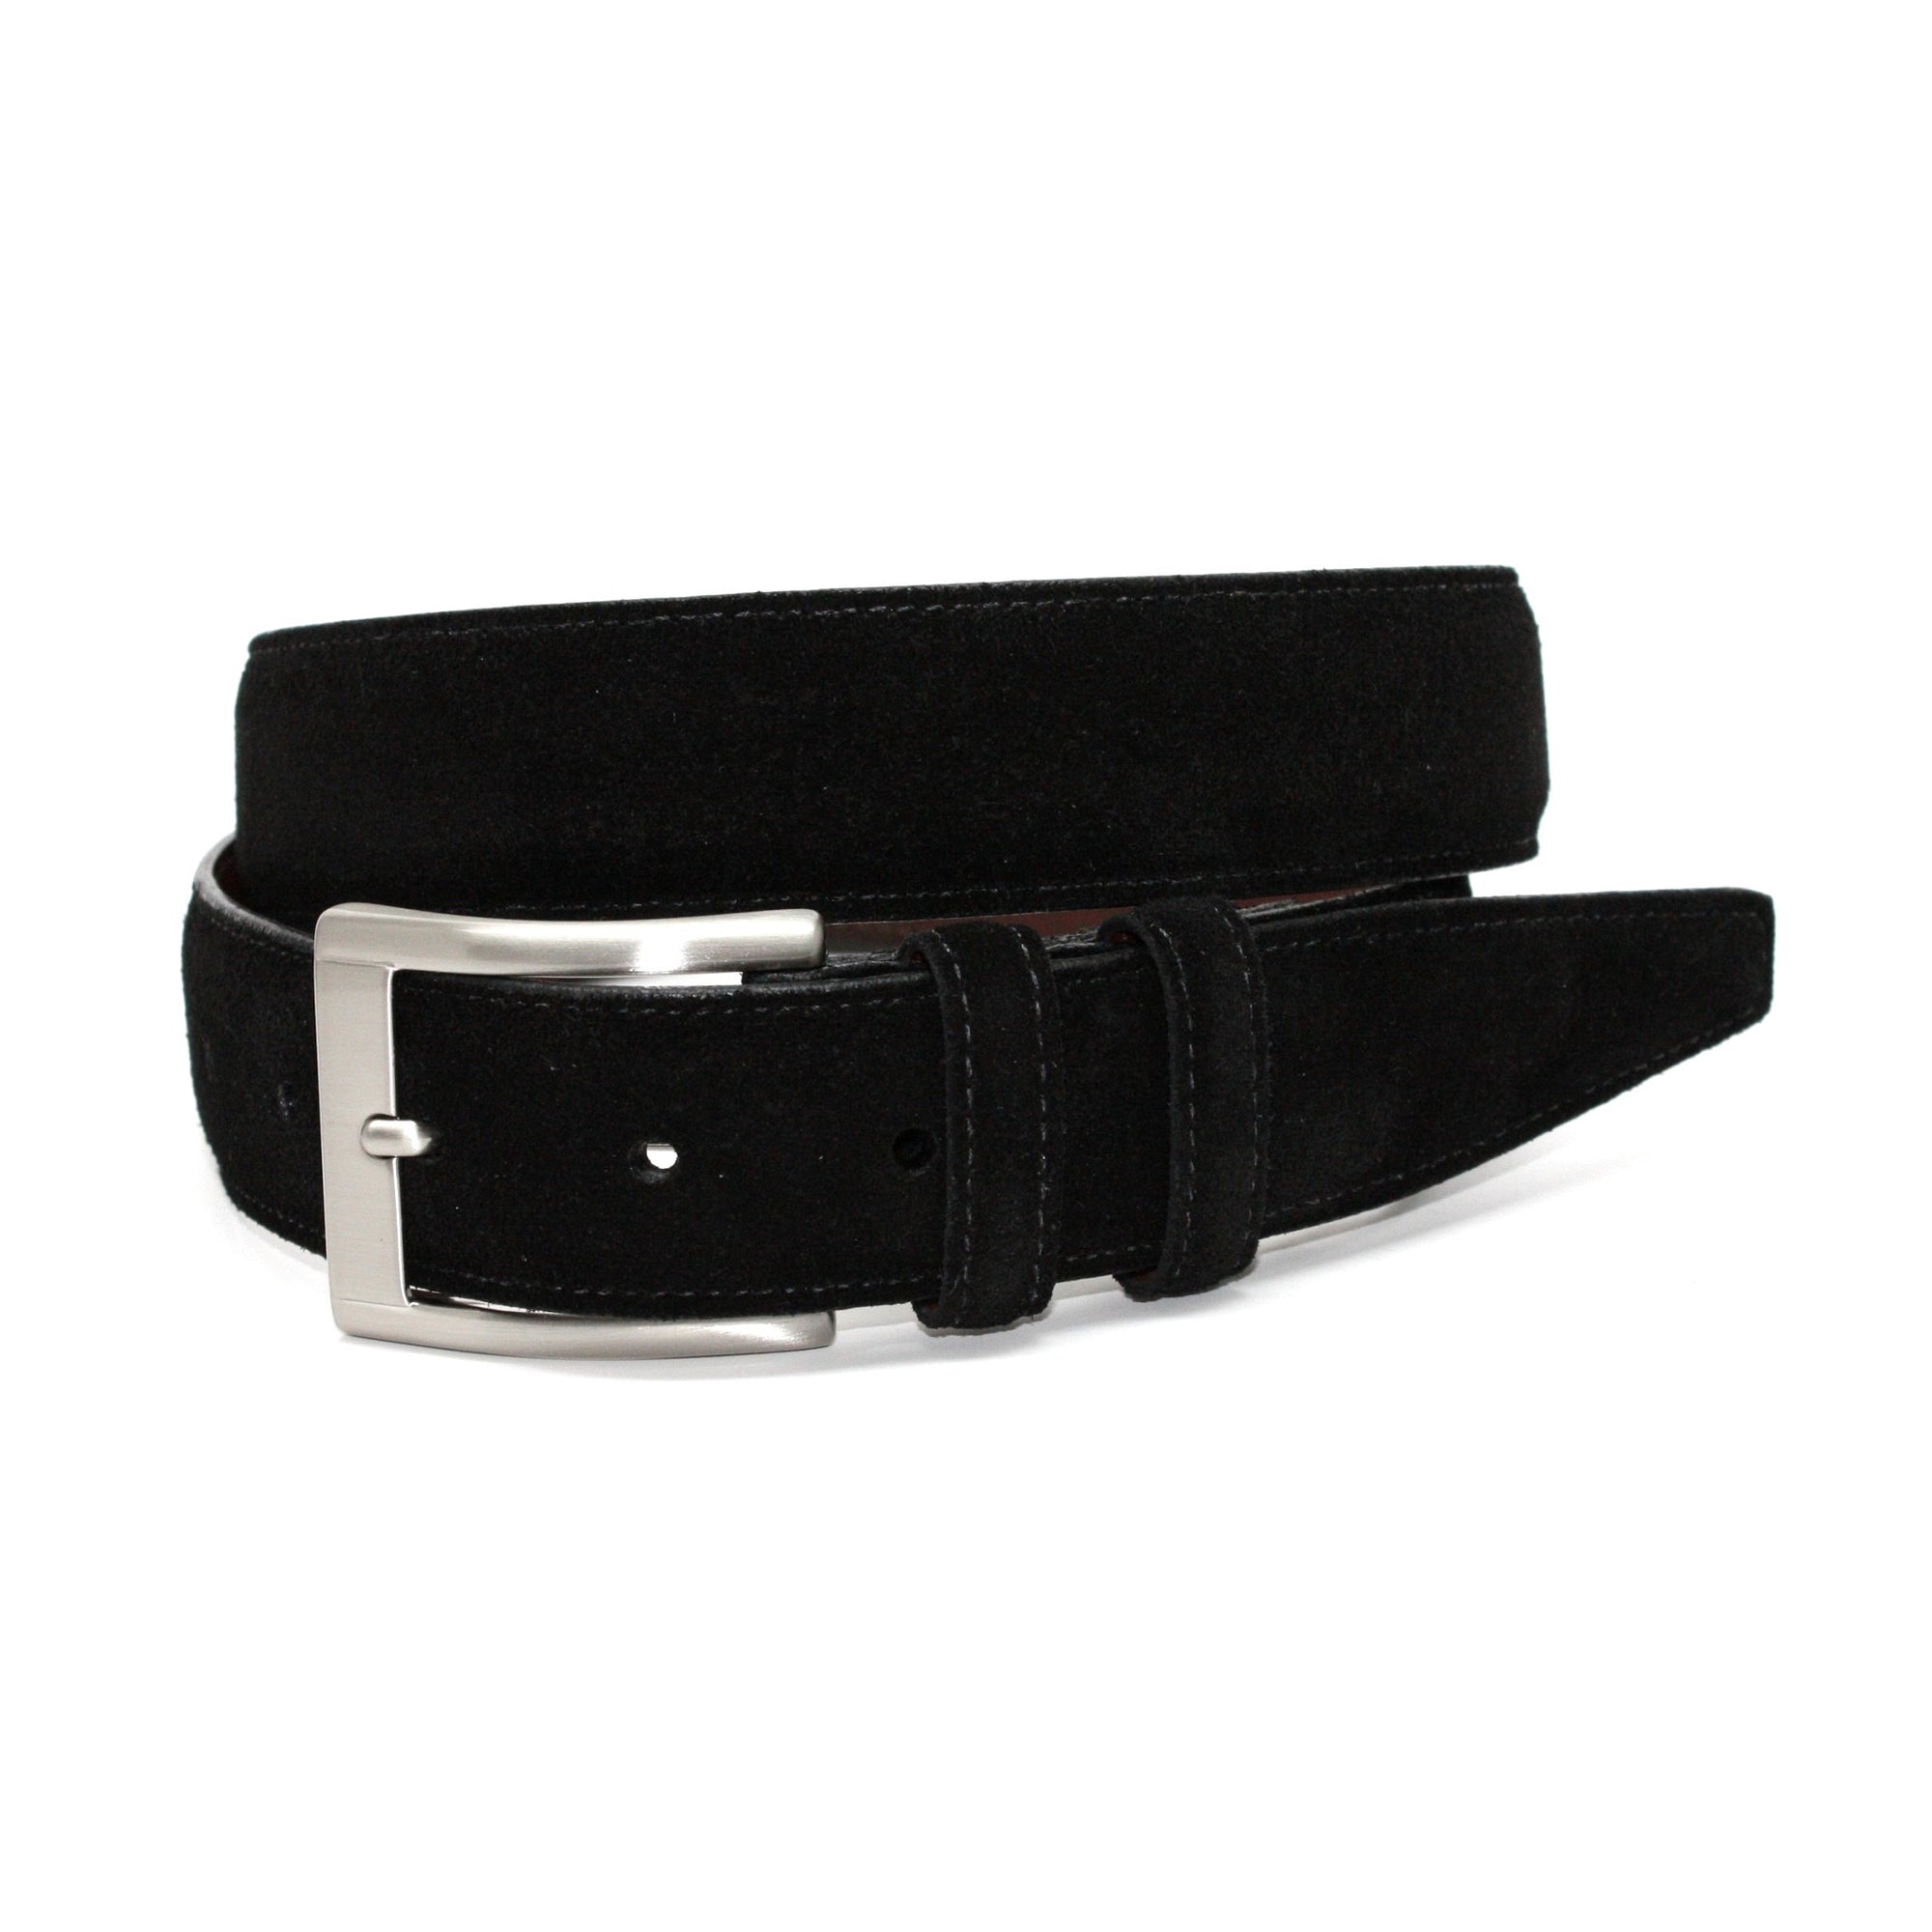 Italian Sueded Calfskin Belt in Black by Torino Leather